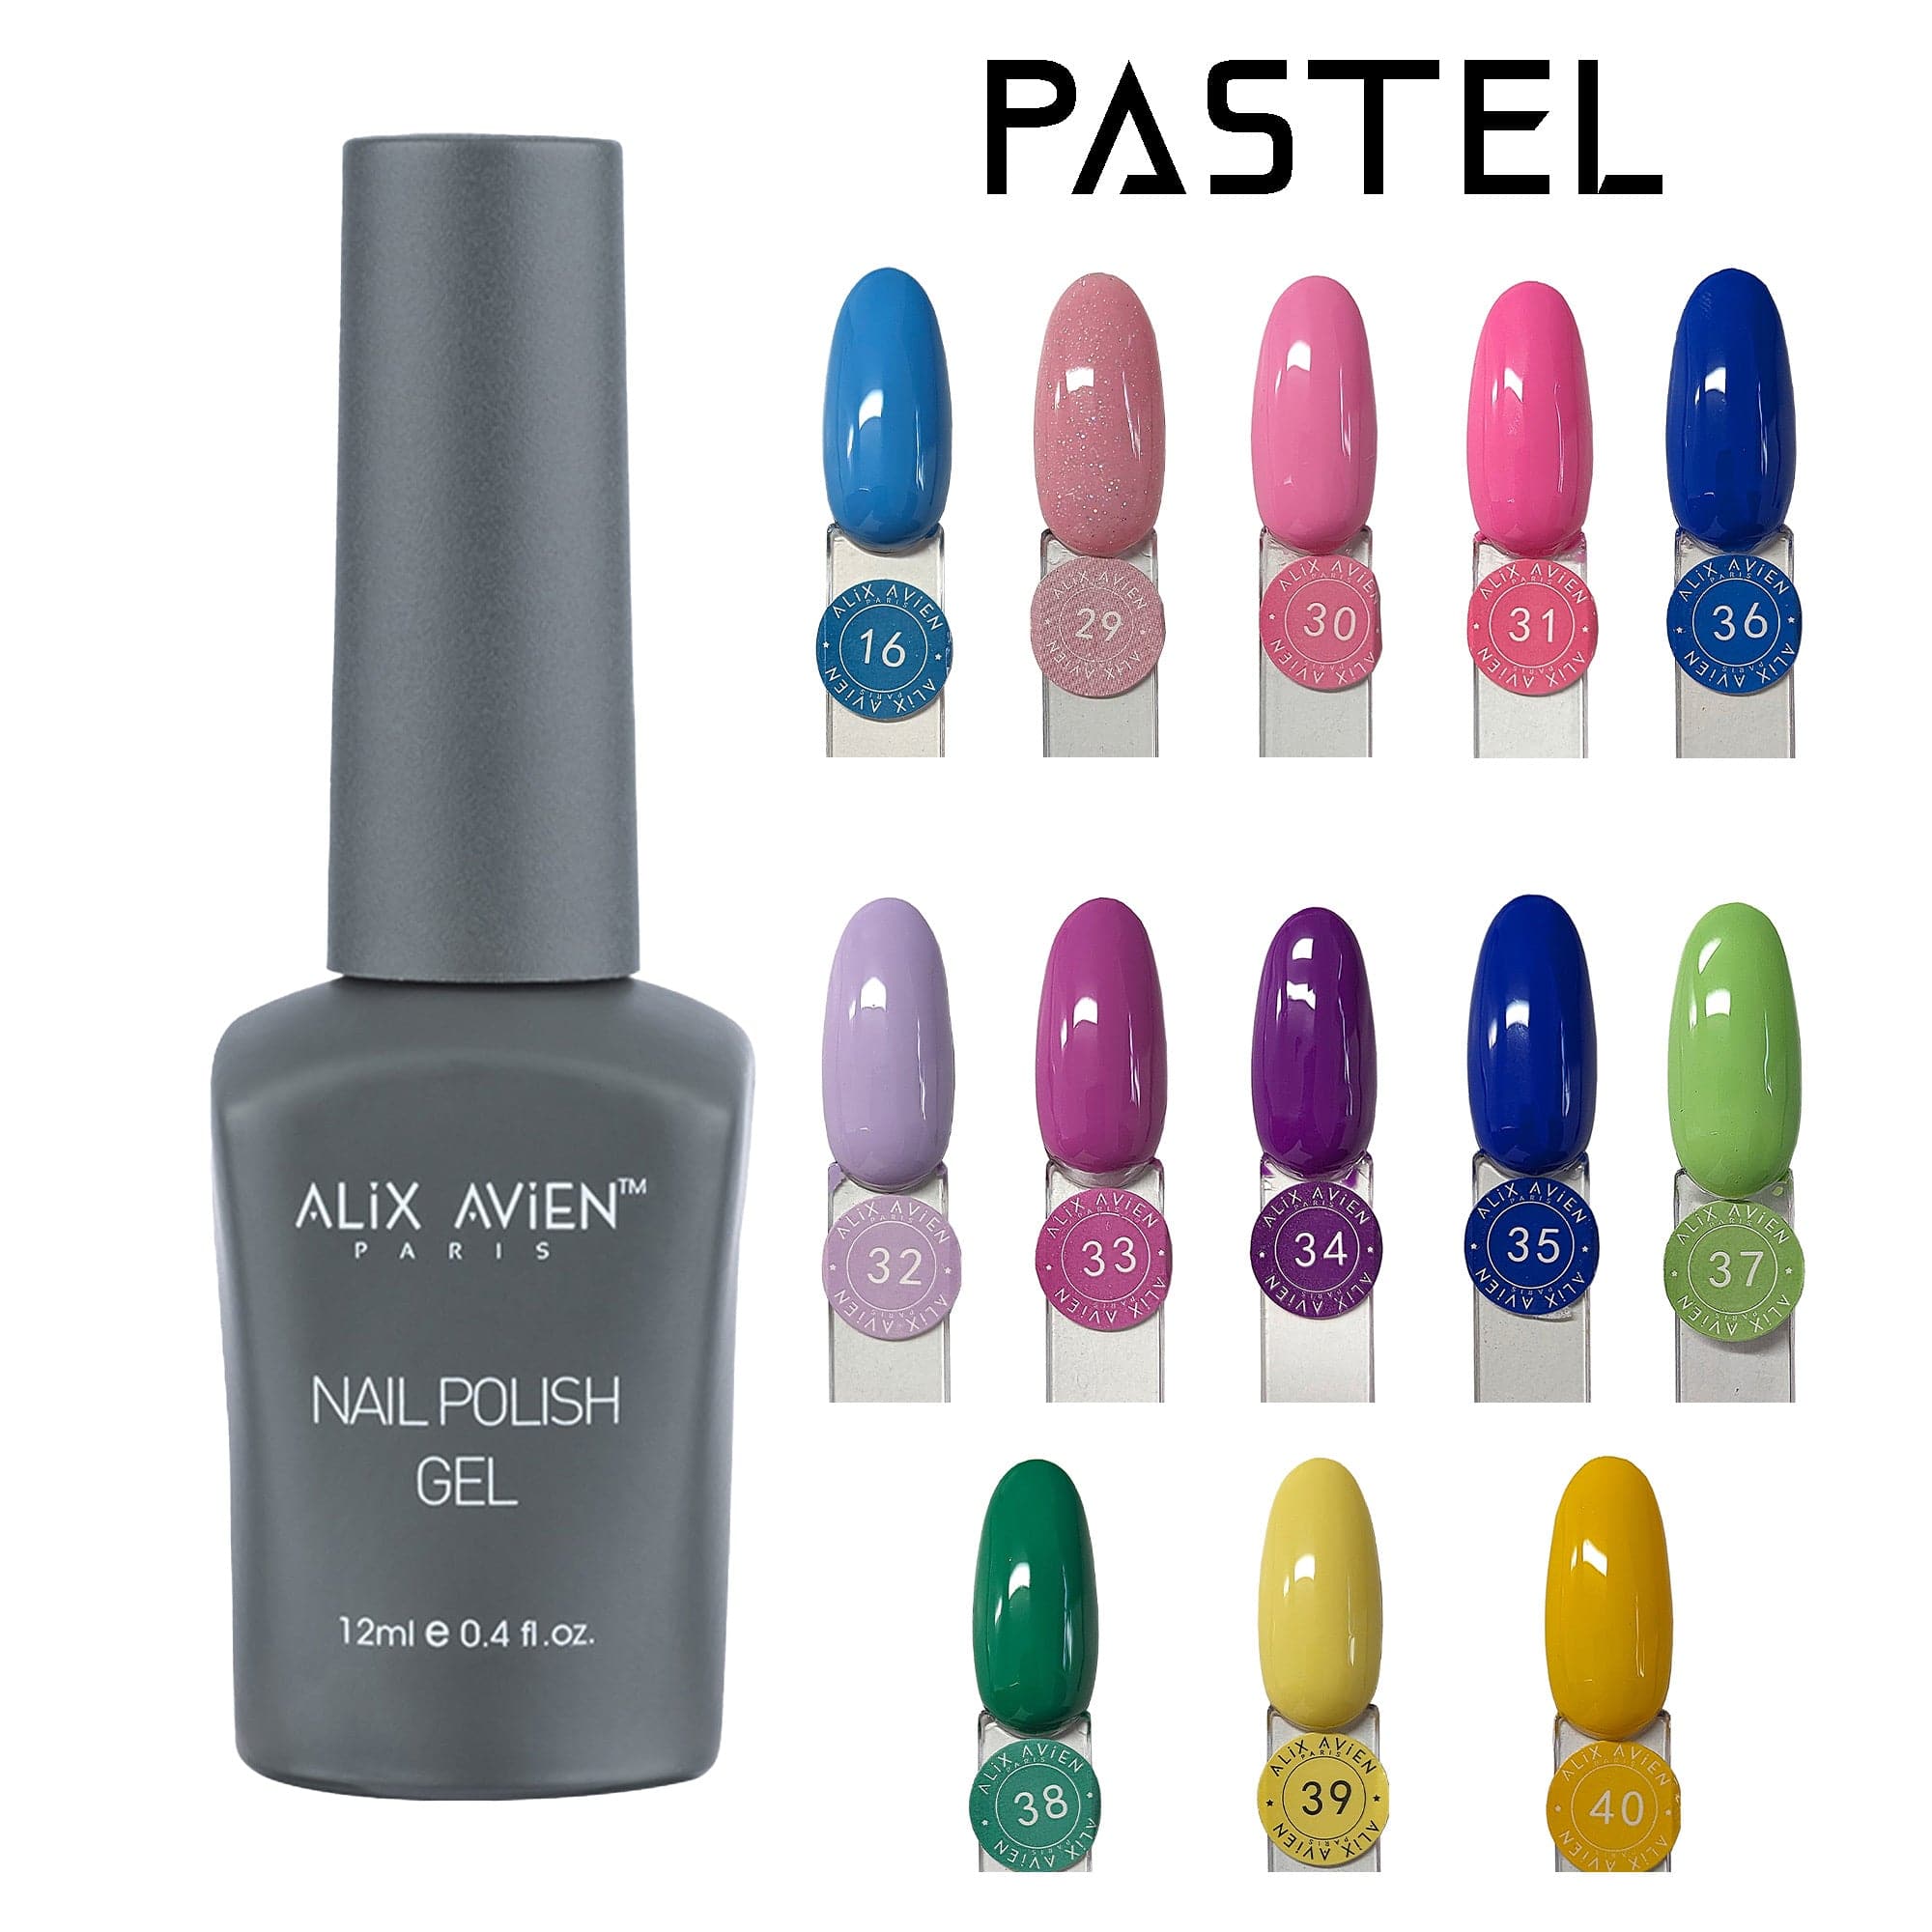 Alix Avien - Nail Polish Gel No.16 (Serenity Blue)